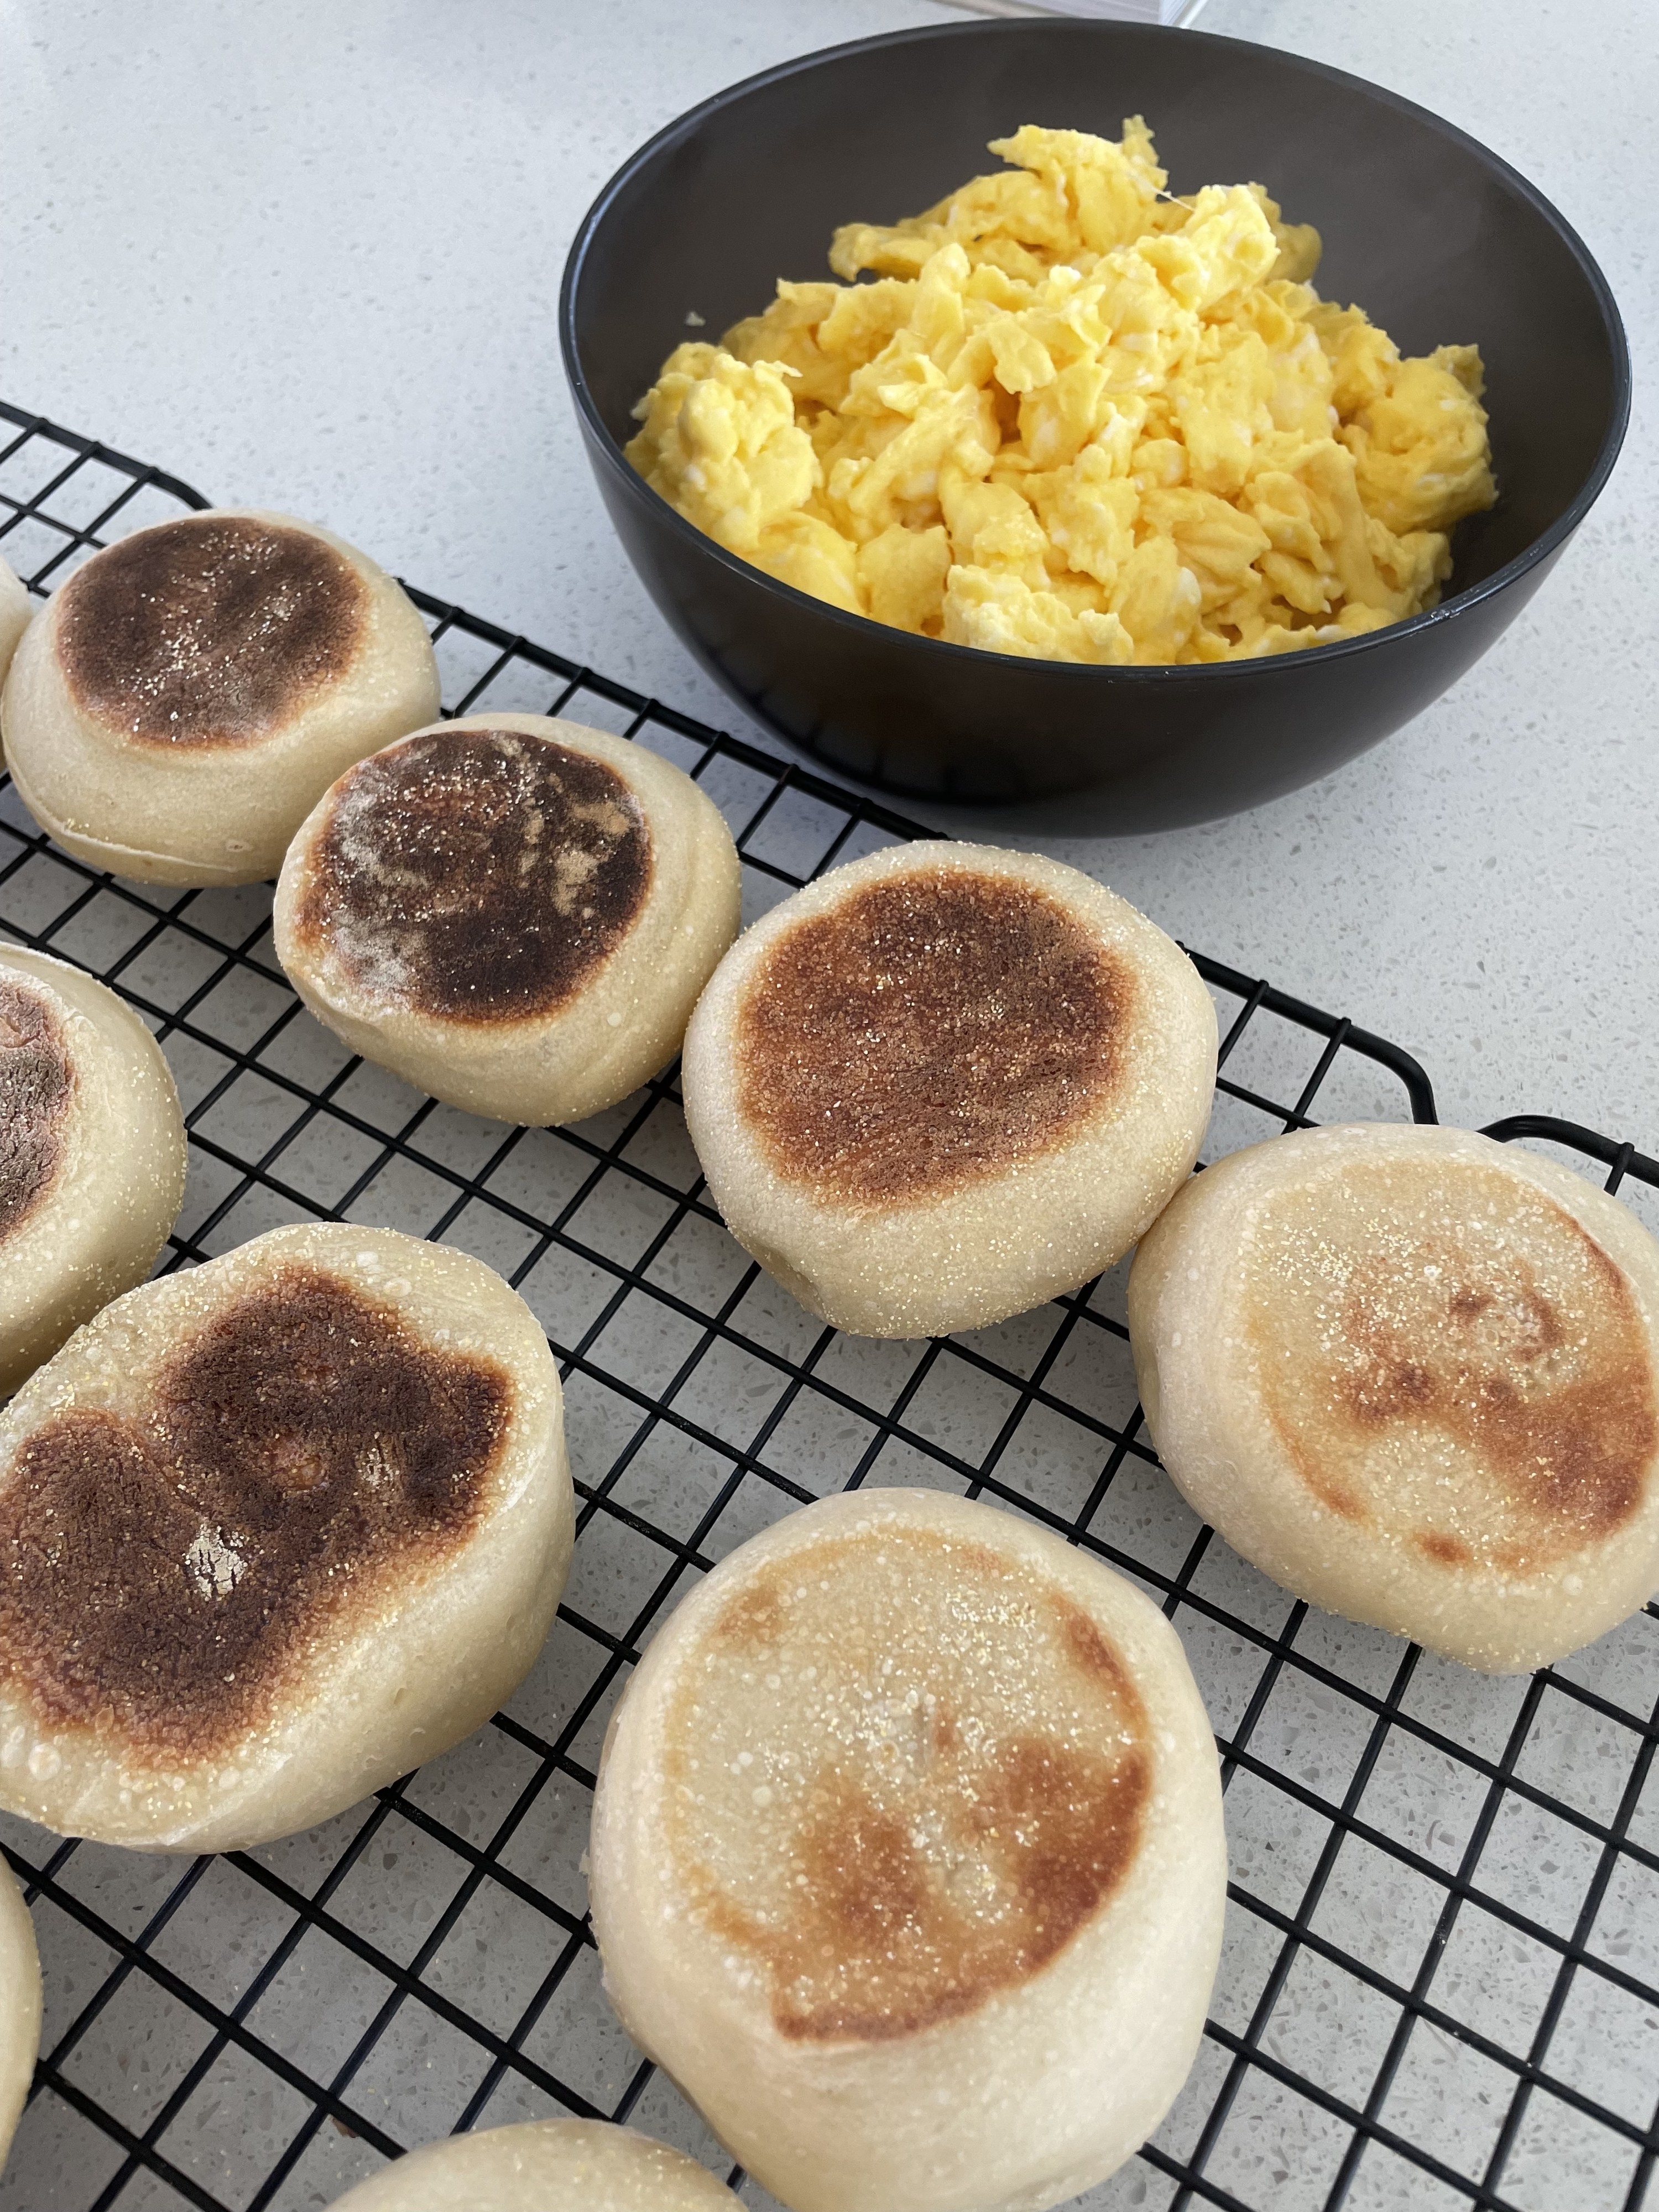 English muffins alongside a bowl of scrambled eggs